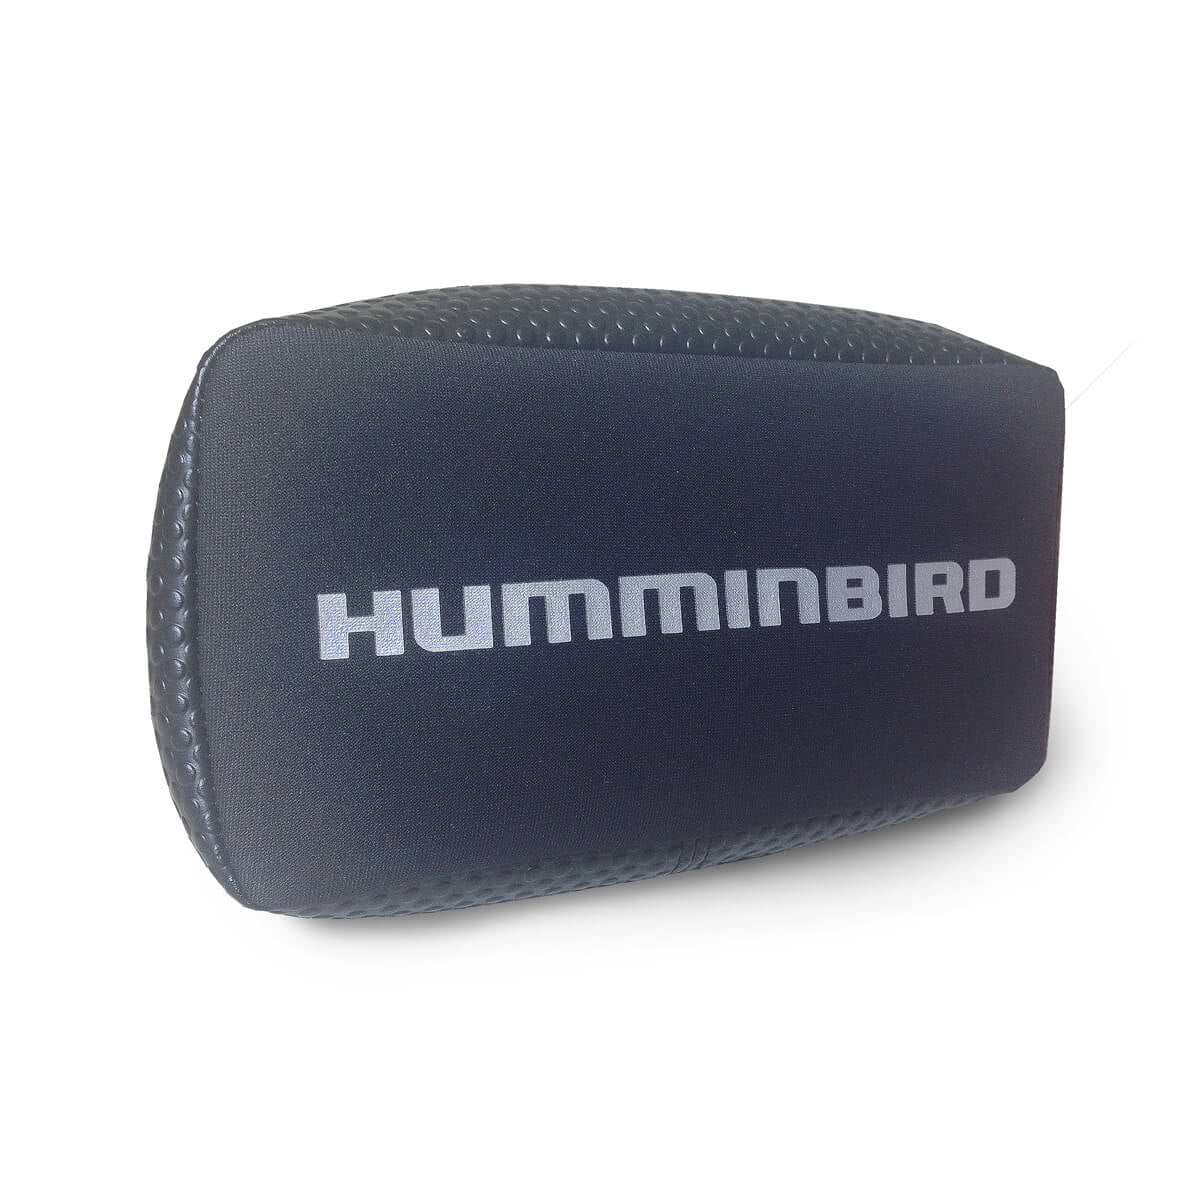 Gimbal Mount for HELIX-5 Series Units for sale online 1 Minn Kota Humminbird 740143-1 GM H5